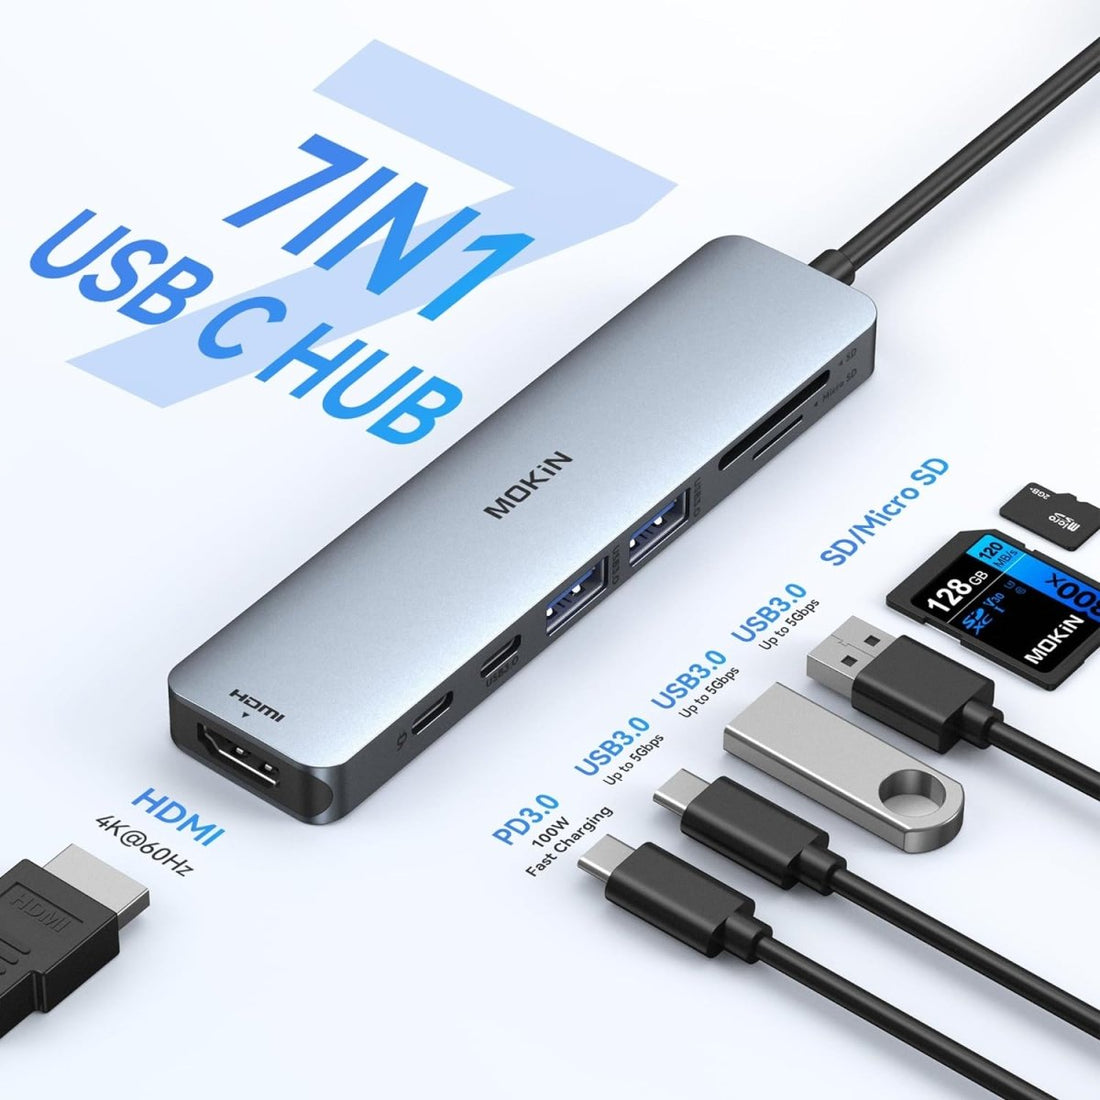 MOKiN USB C Hub HDMI Adapter for MacBook Pro/Air 7 in 1 USB C Dongle Card Reader